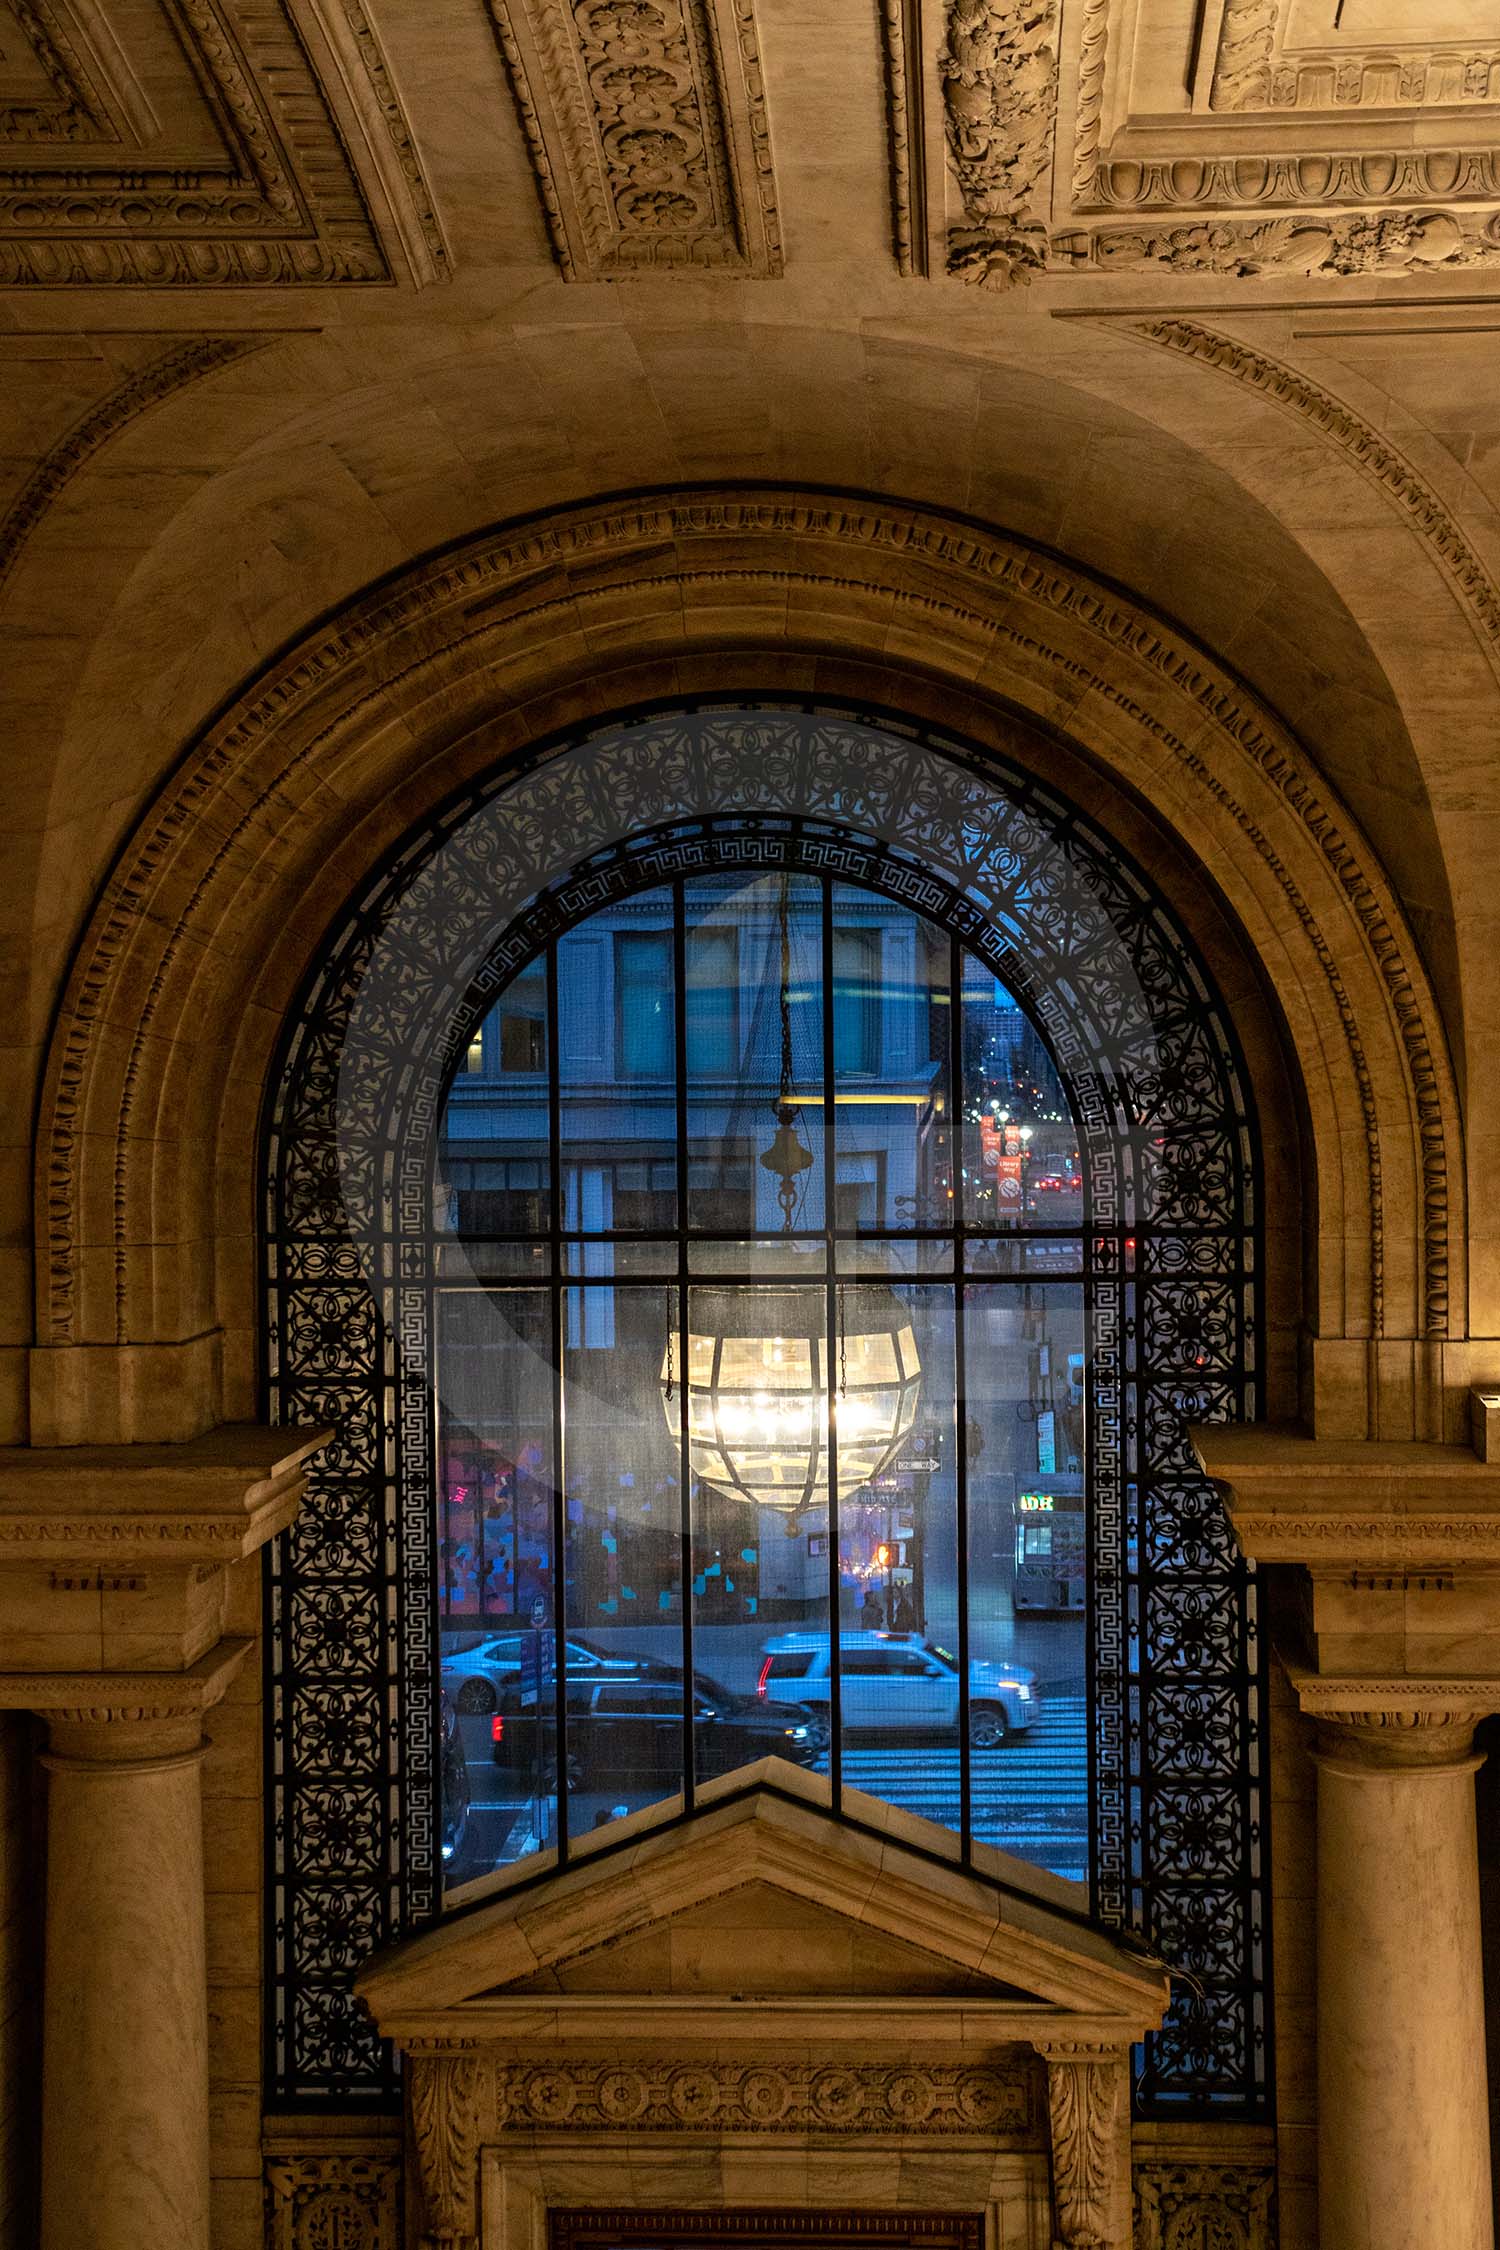 large ornate window